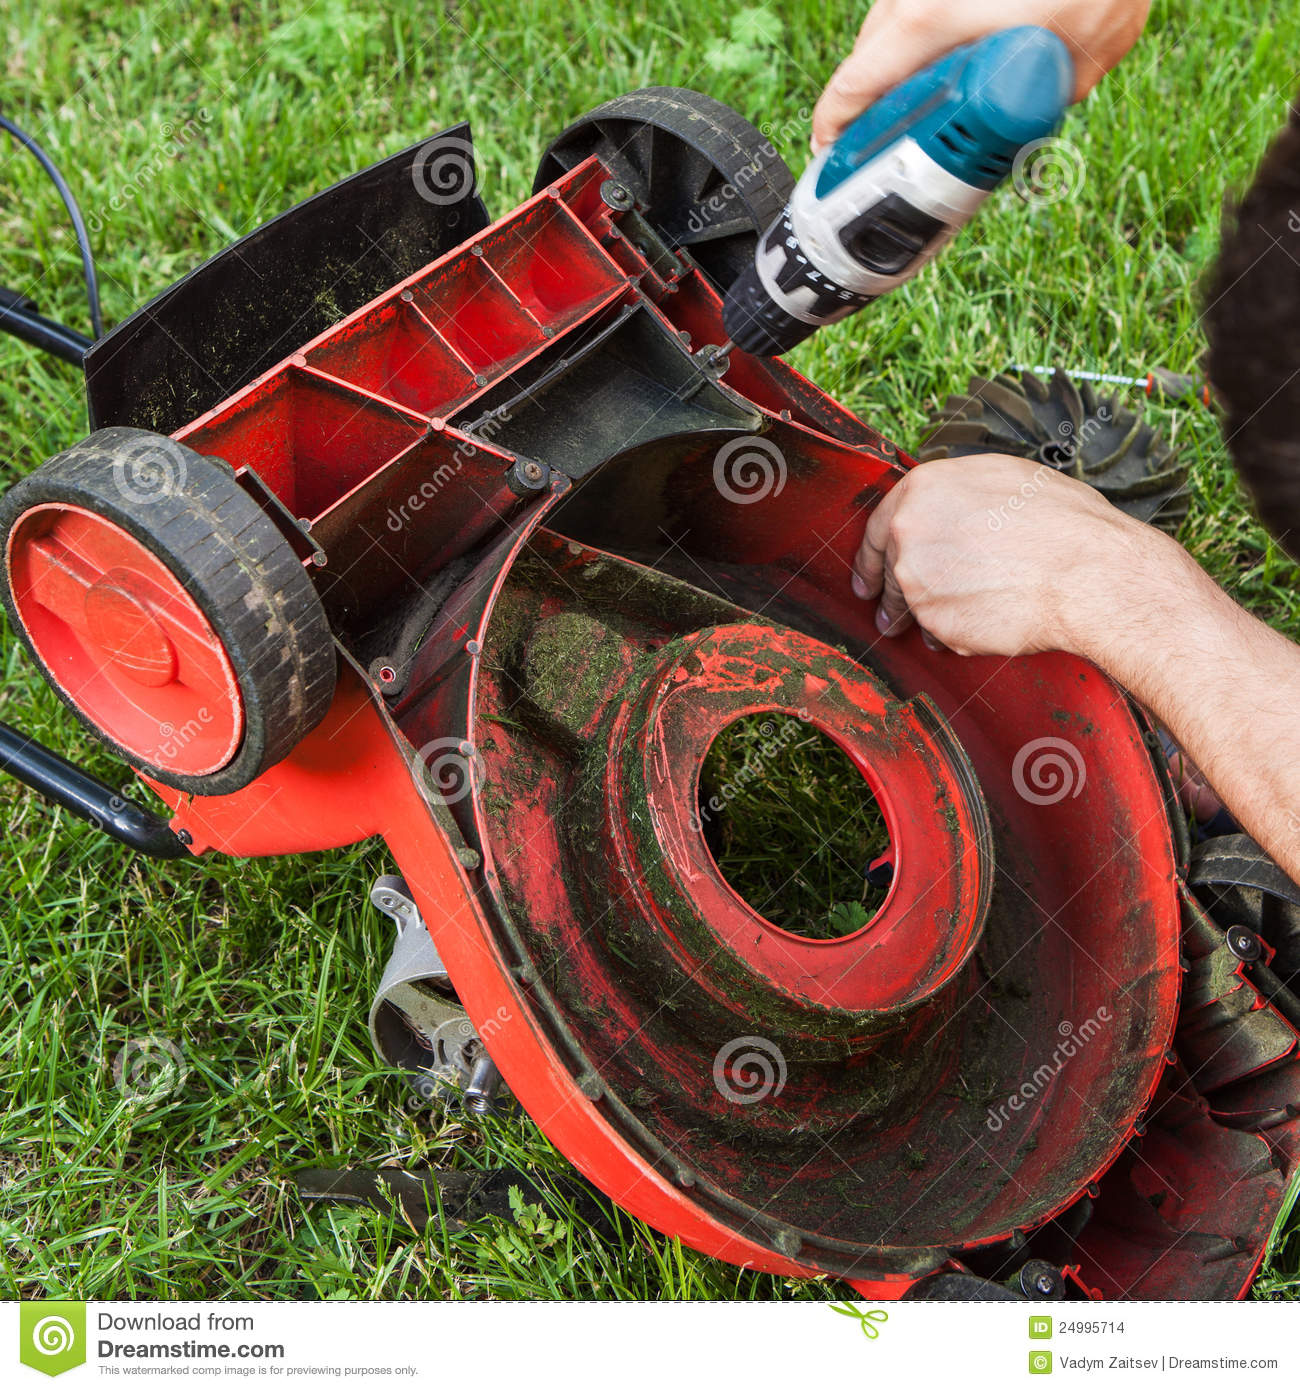 Lawn mower repair stock photo. Image of backyard, grass